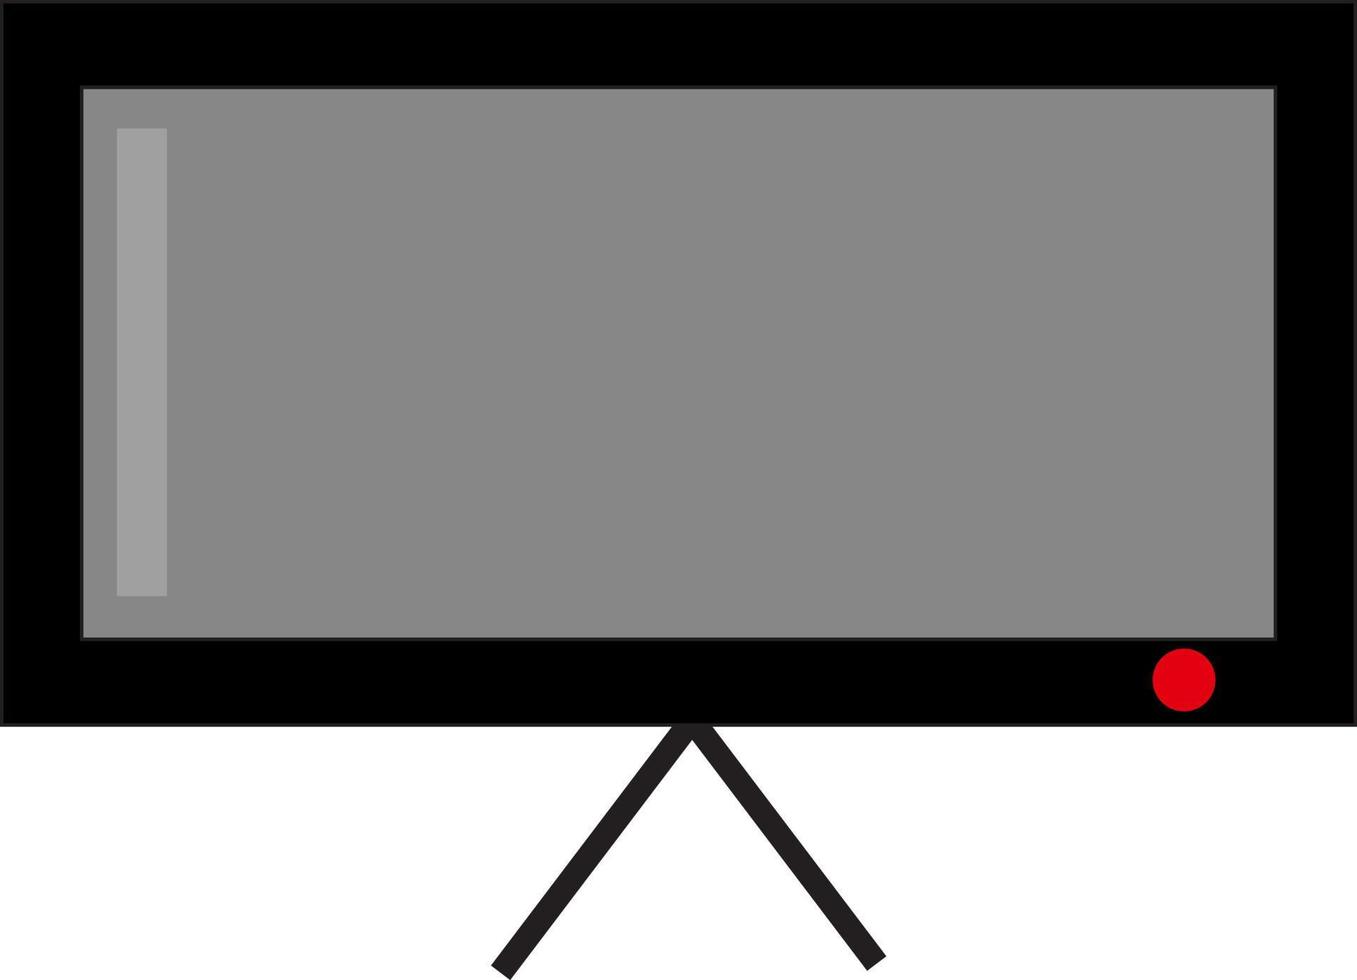 Big TV, illustration, vector on white background.